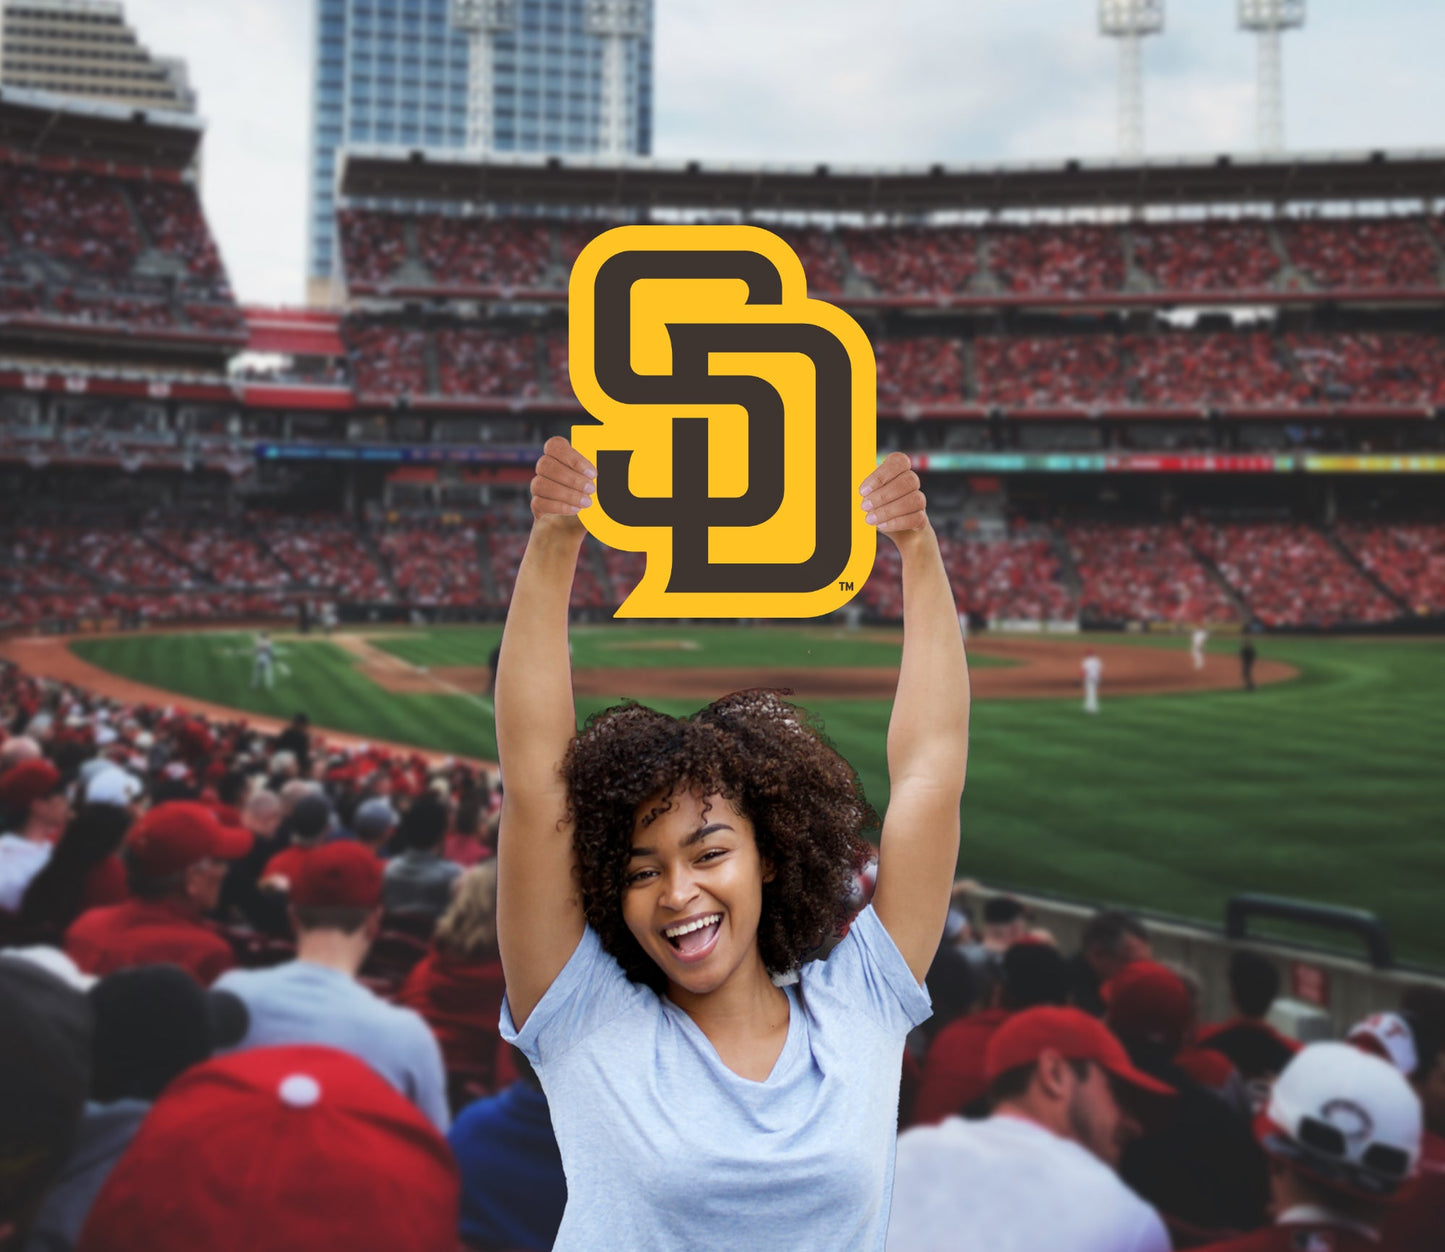 San Diego Padres: Logo Foam Core Cutout - Officially Licensed MLB Big Head